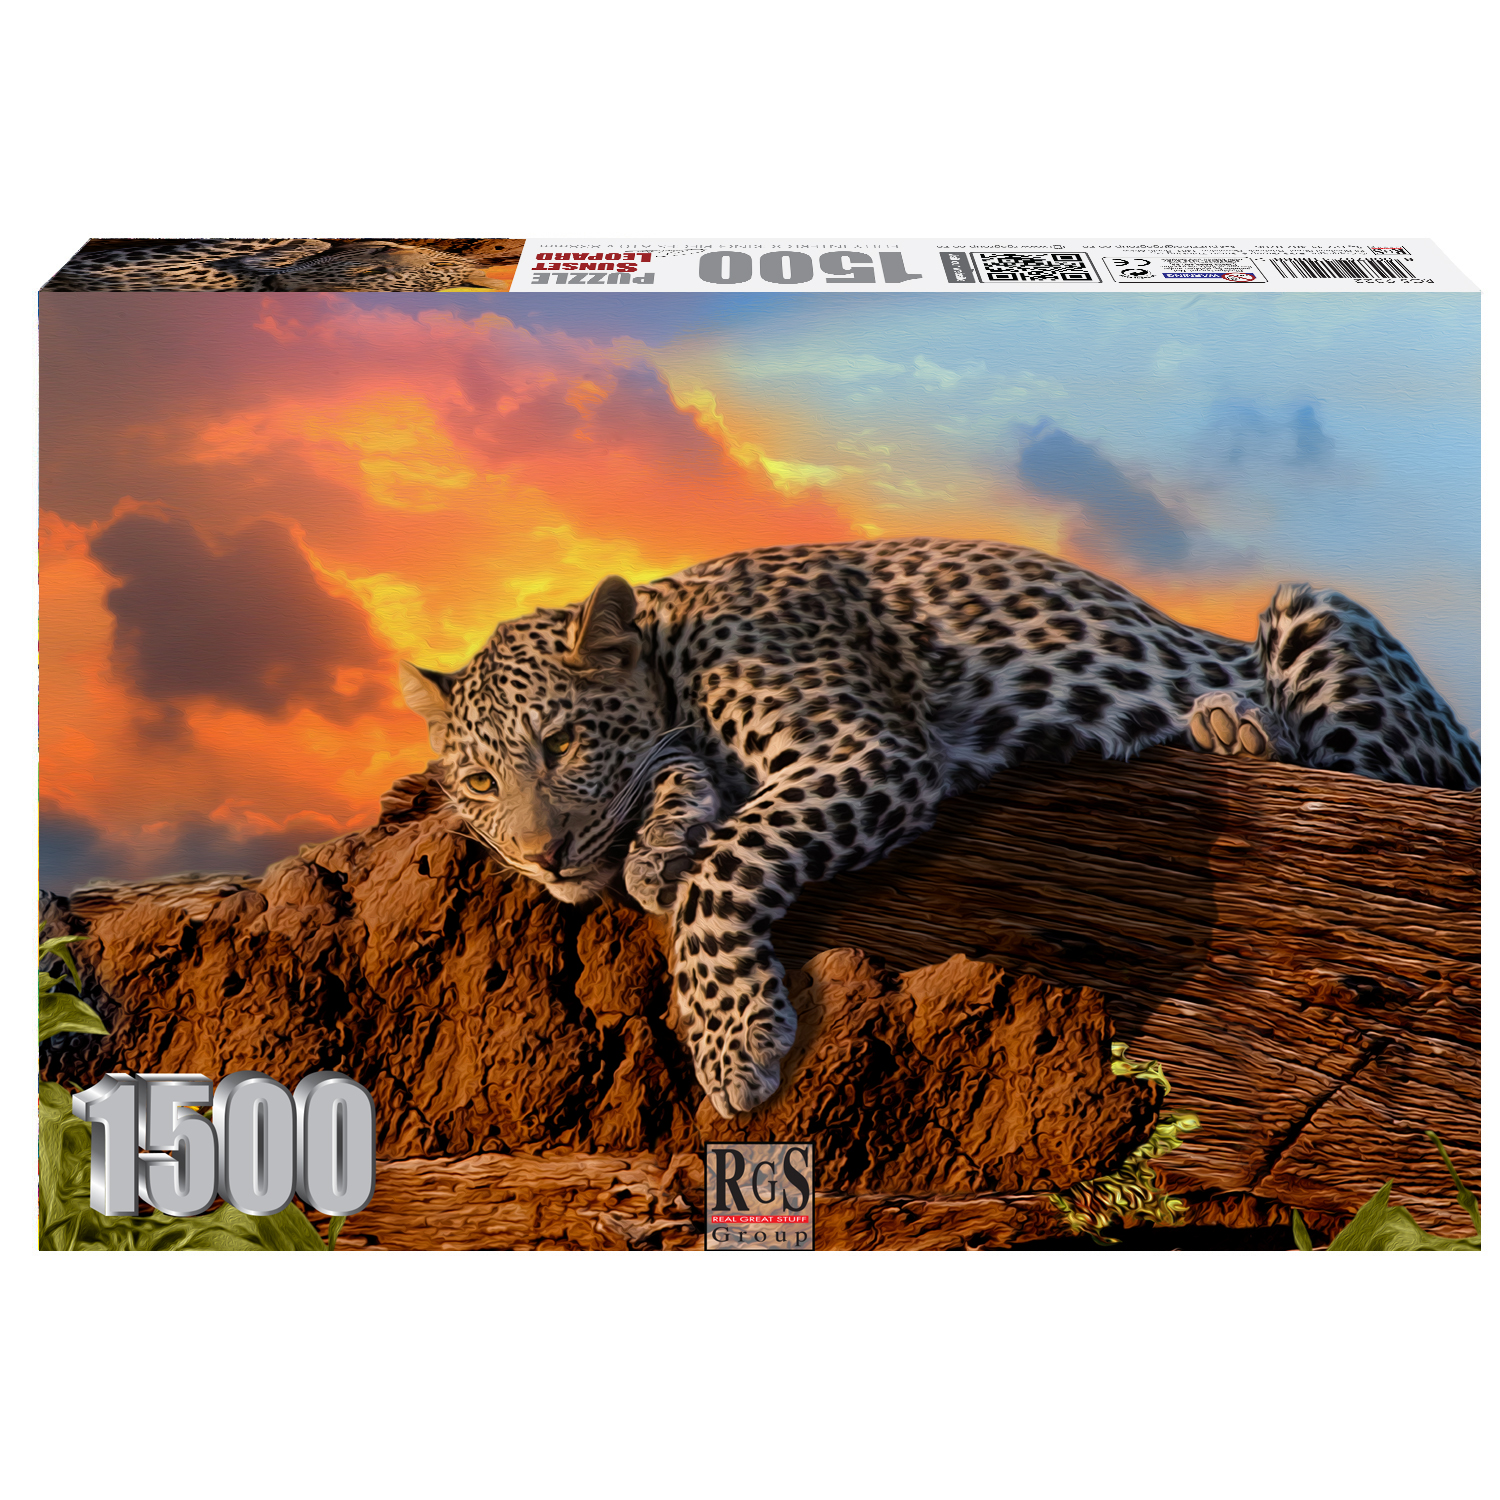 lazy leopard at sunset